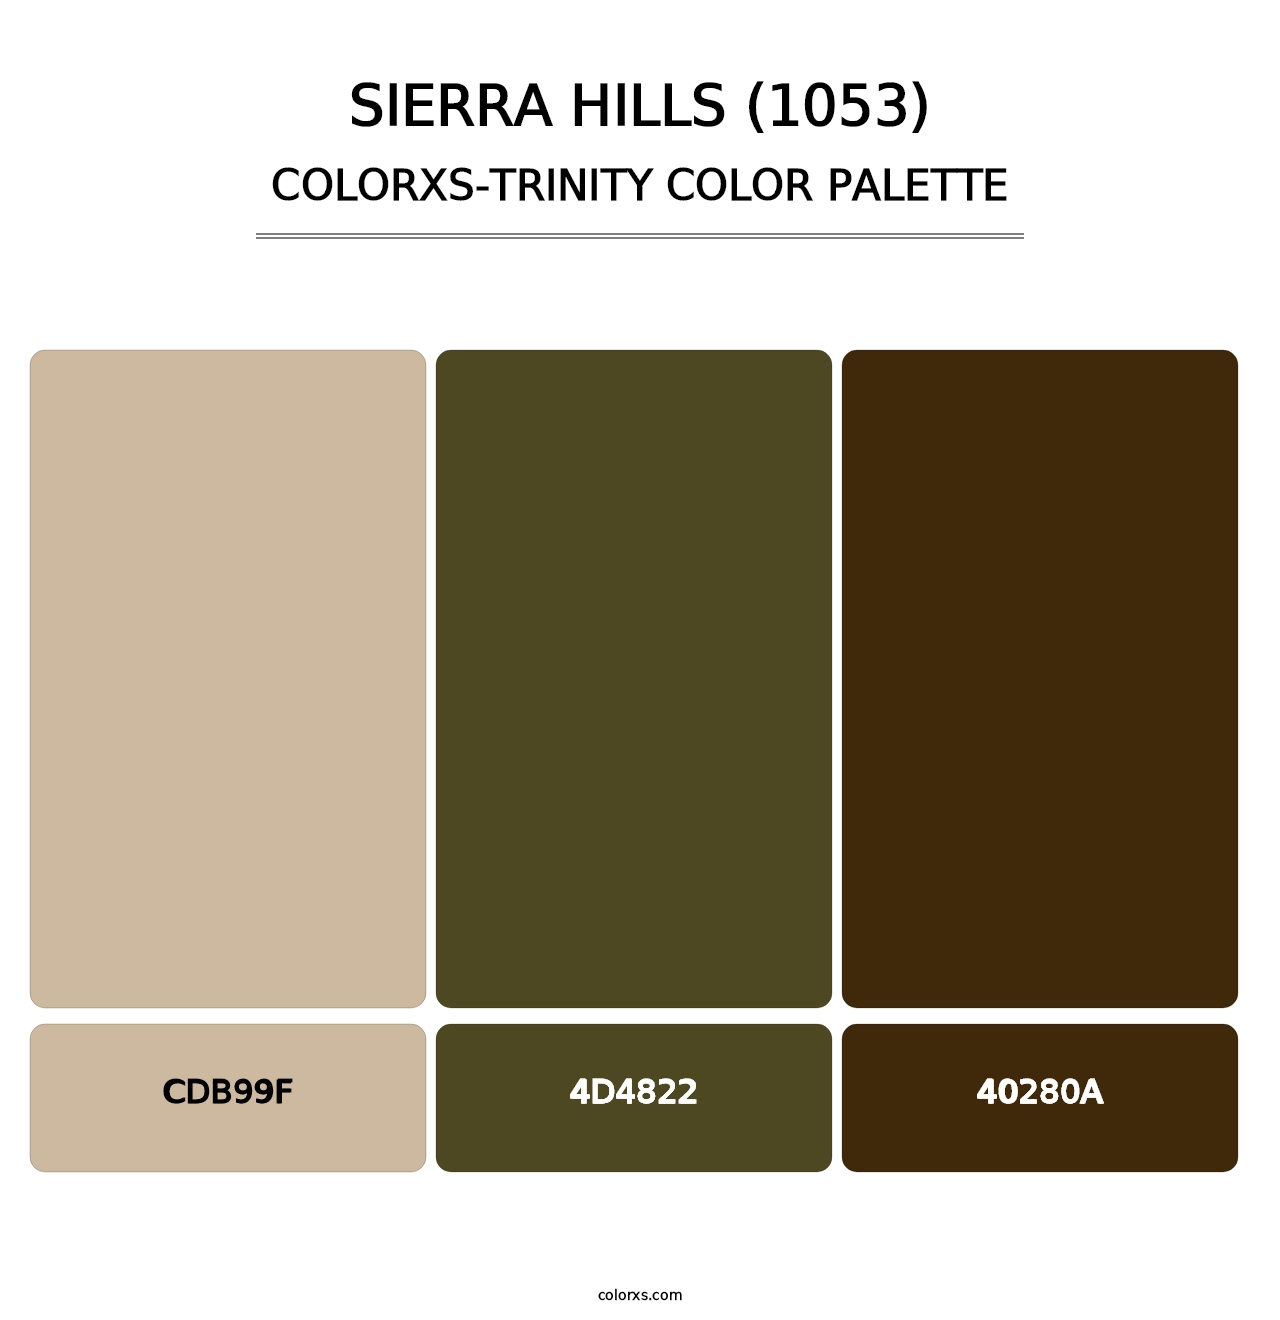 Sierra Hills (1053) - Colorxs Trinity Palette